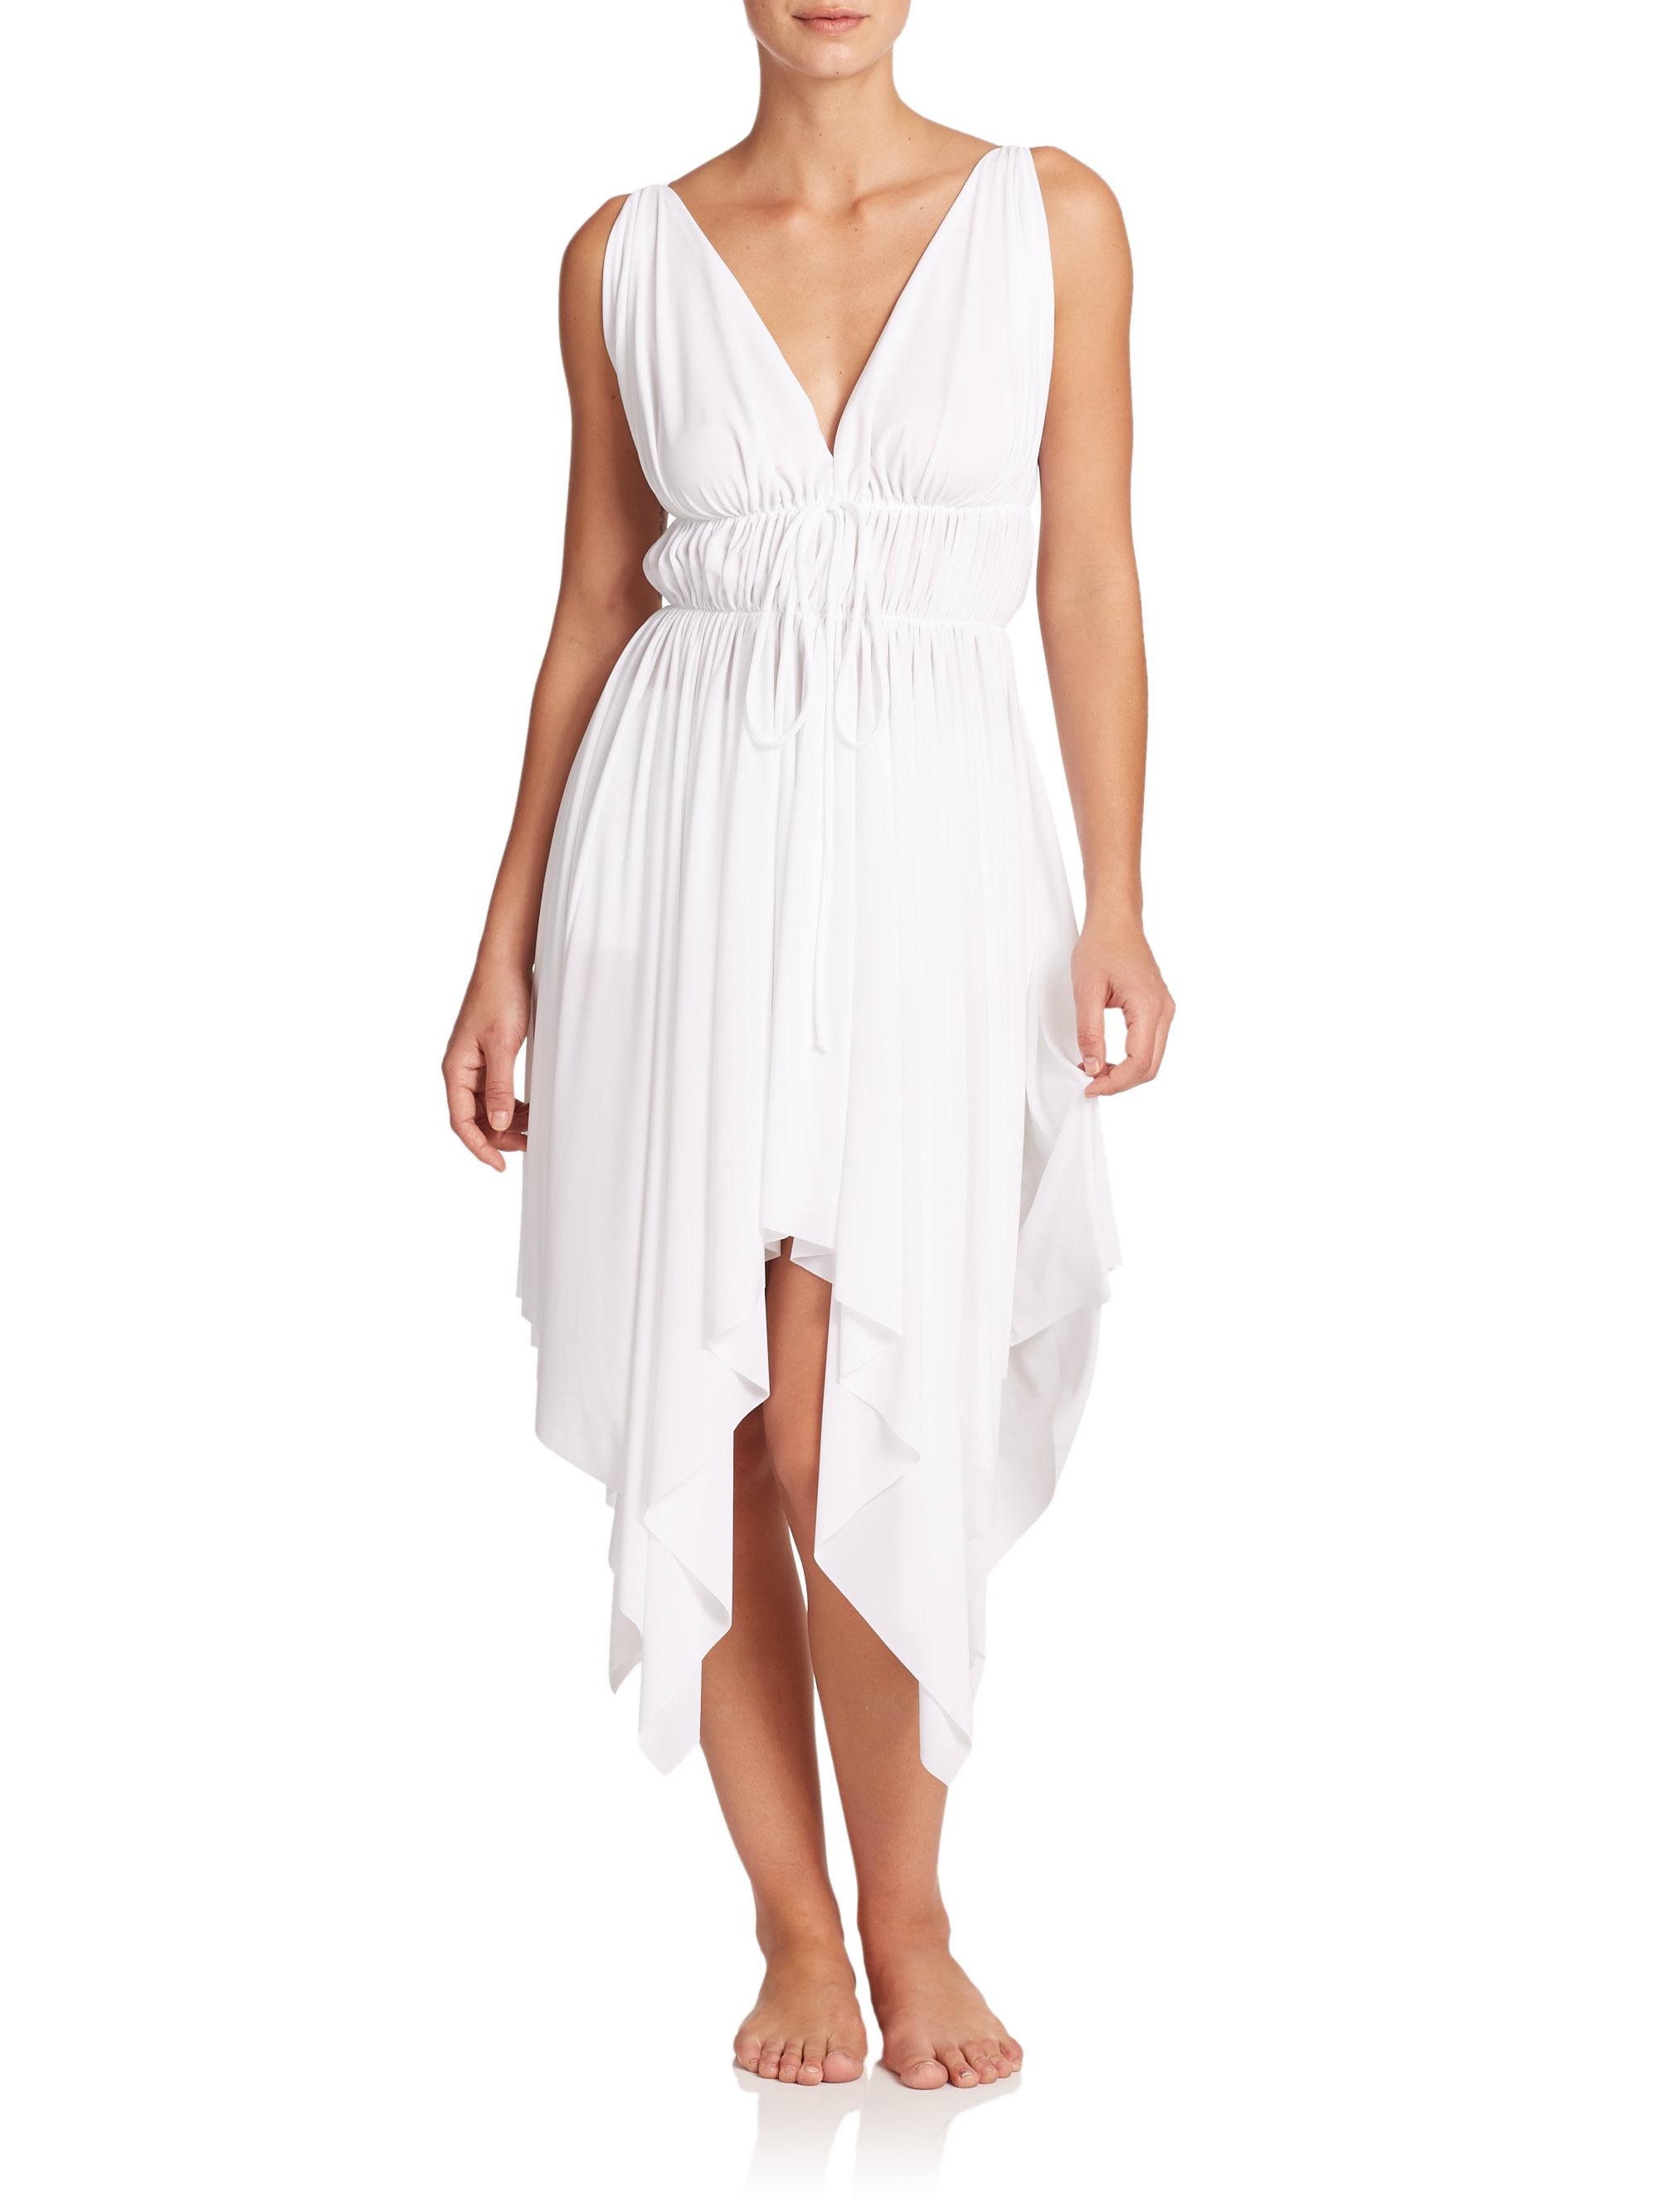 Norma Kamali Synthetic Goddess Asymmetrical Dress in White - Lyst